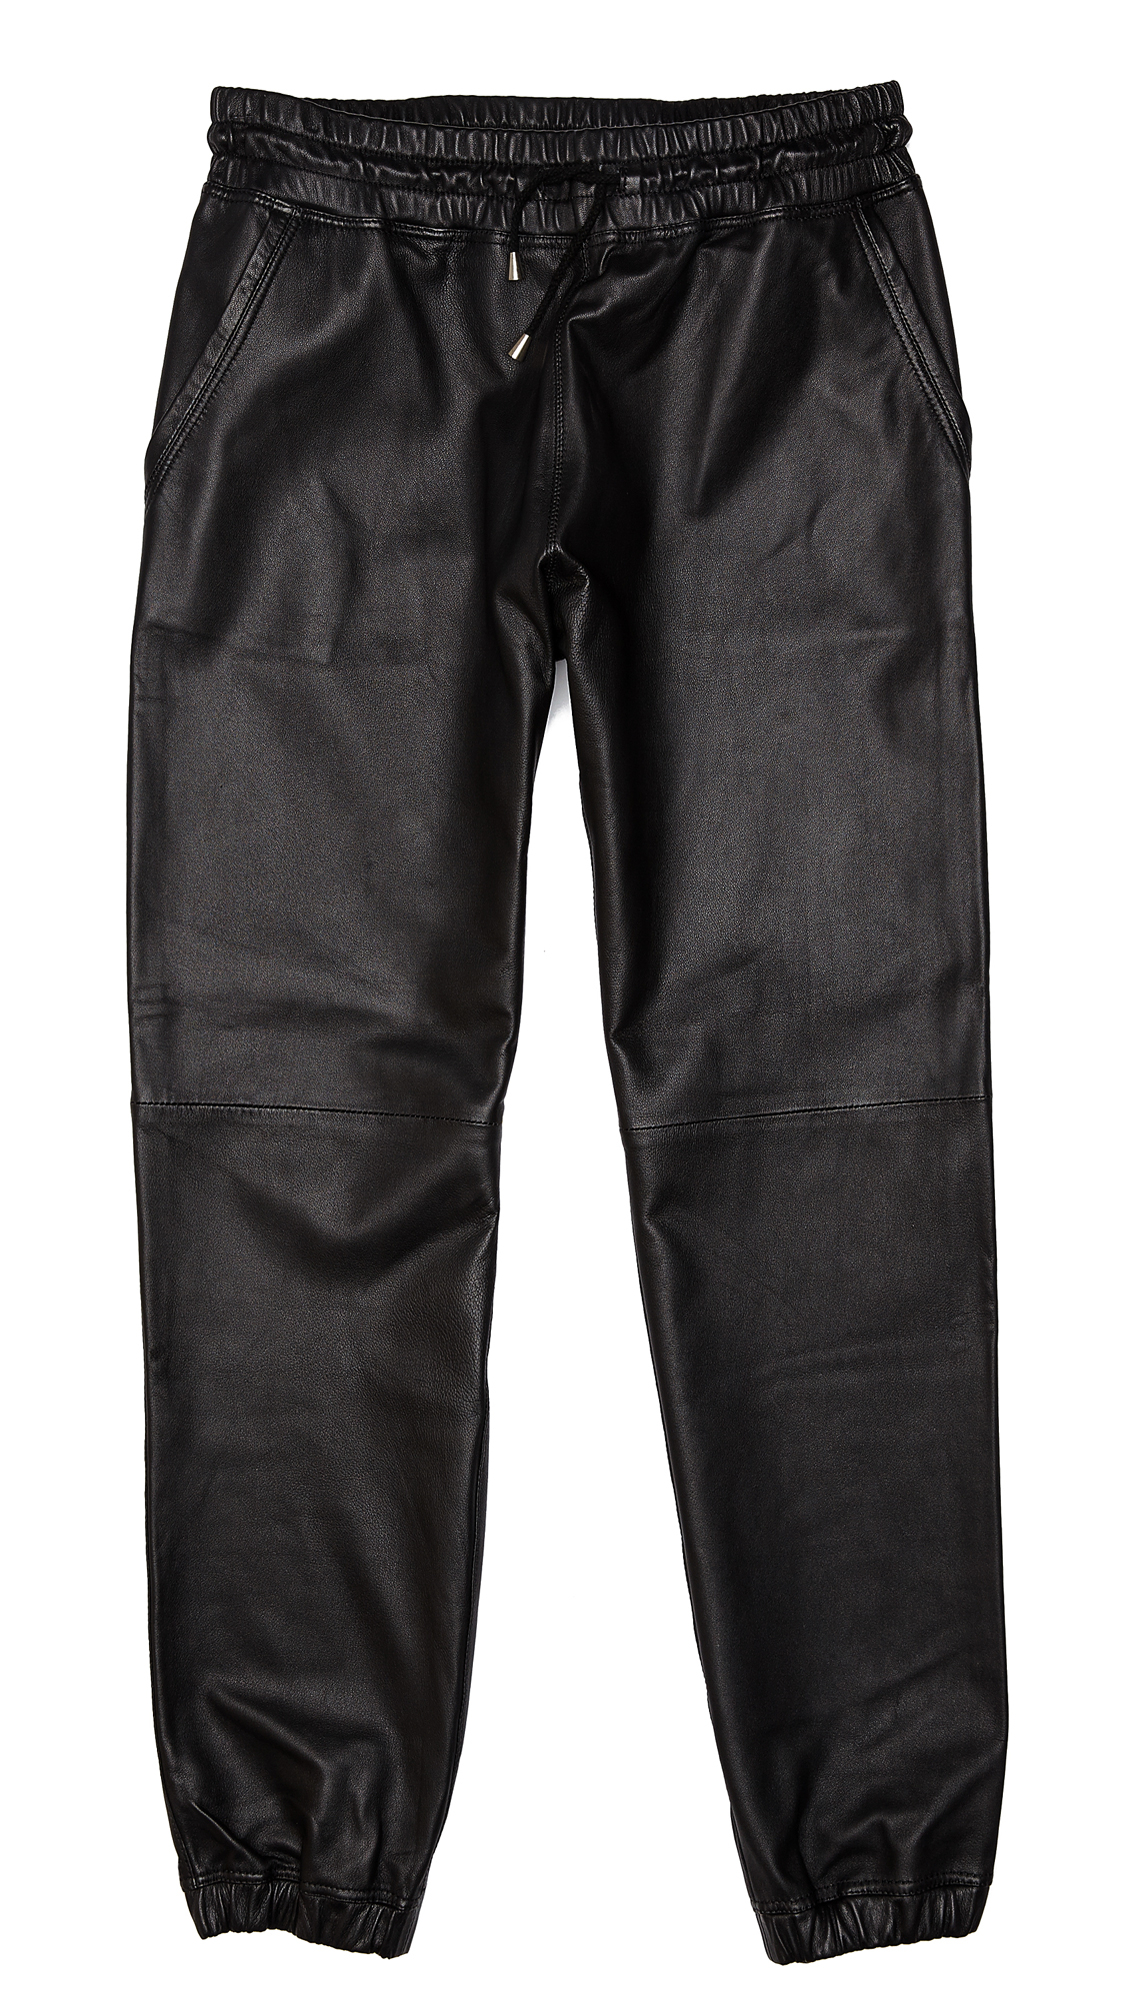 Lyst - Lot78 Leather Sweatpants in Black for Men